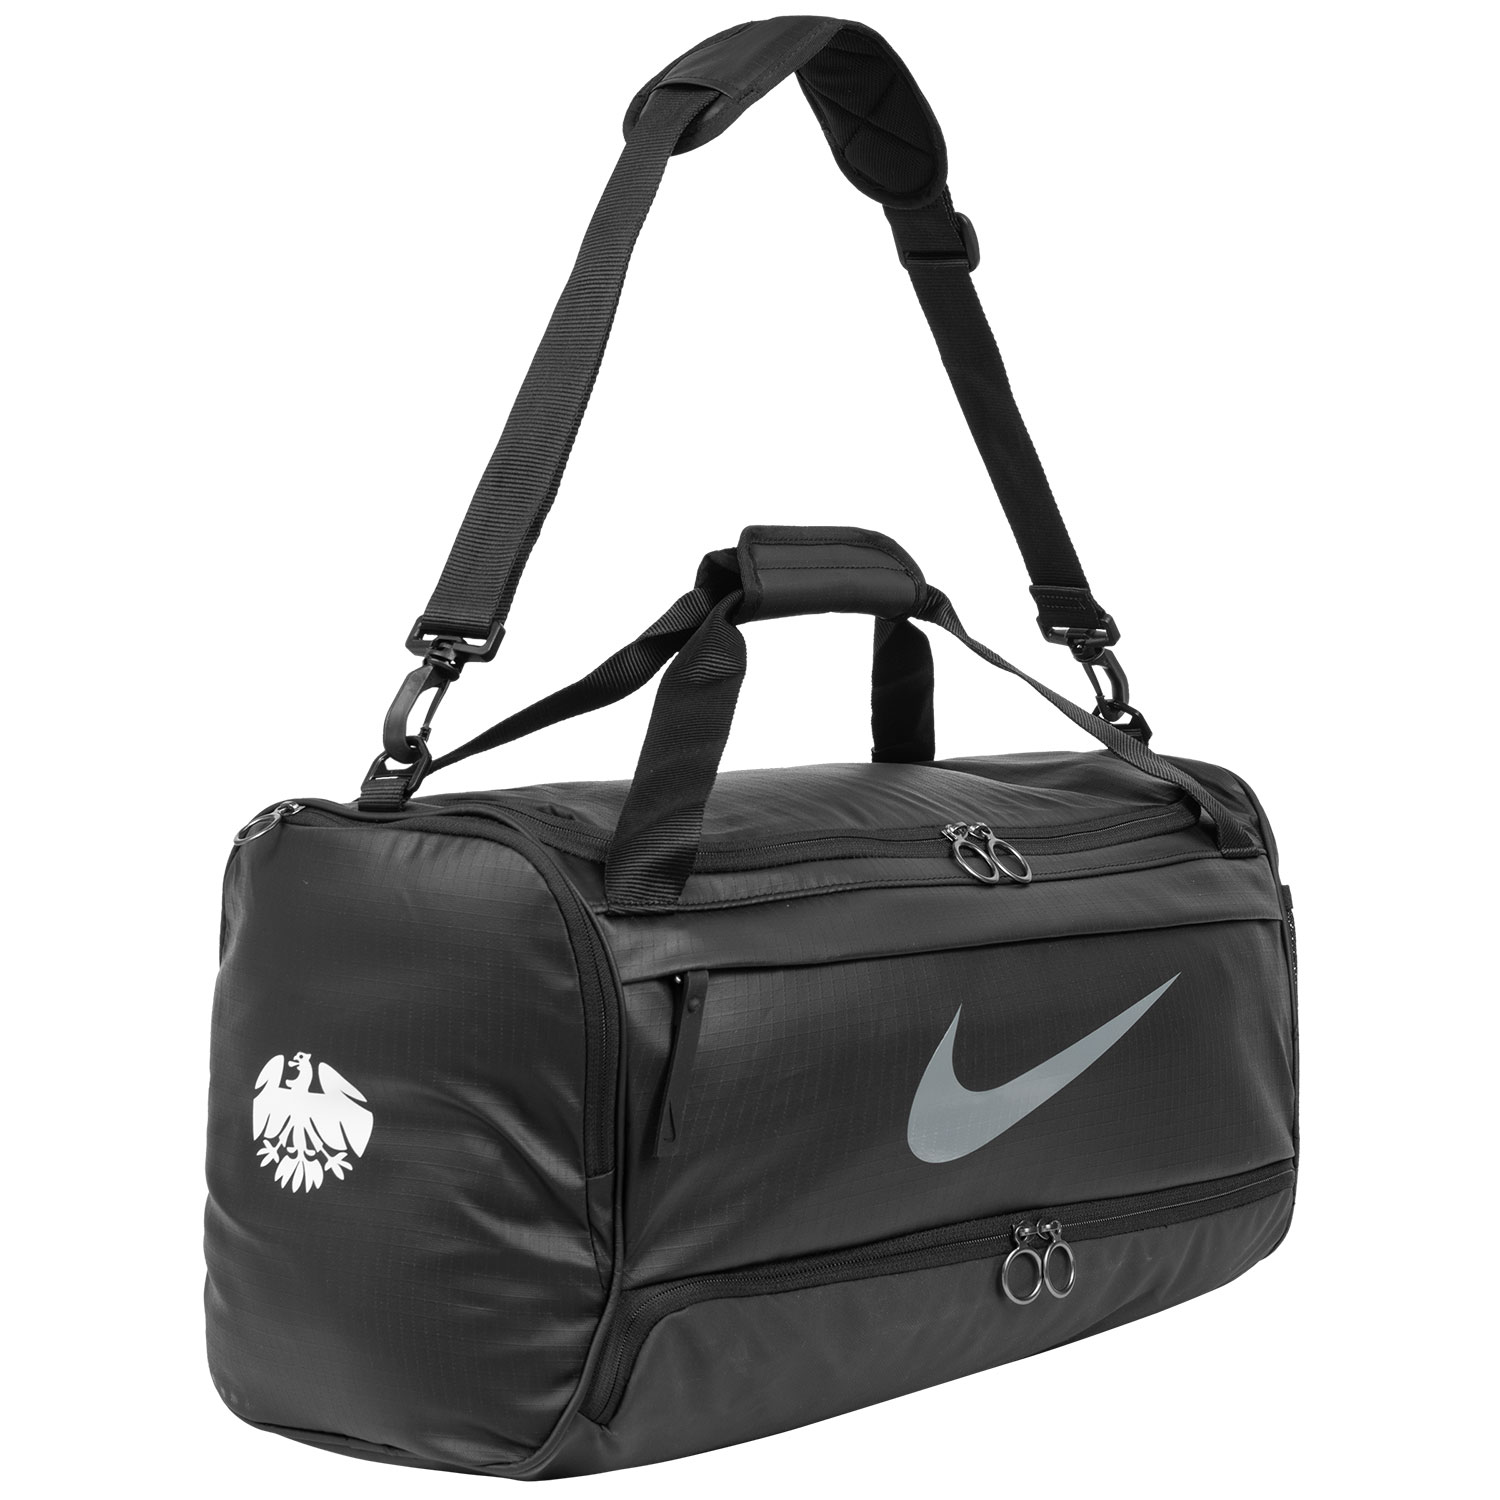 Bild 3: Nike Sporttasche New Eighties black